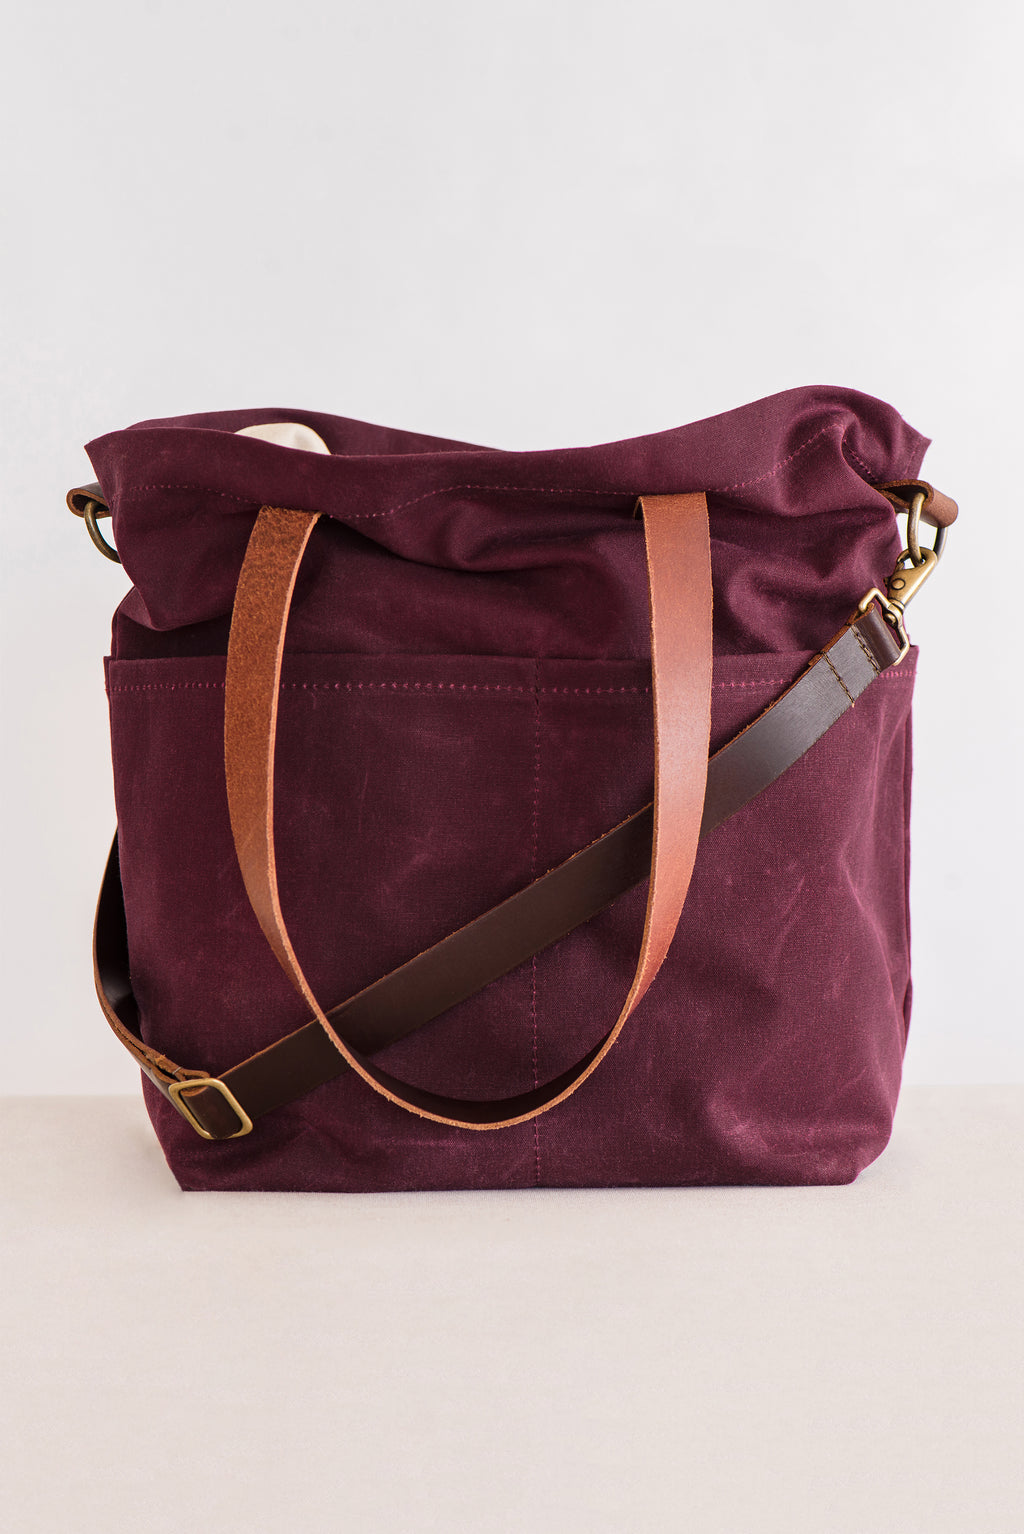 Women's Fabric Cross Body Handbags, Bags